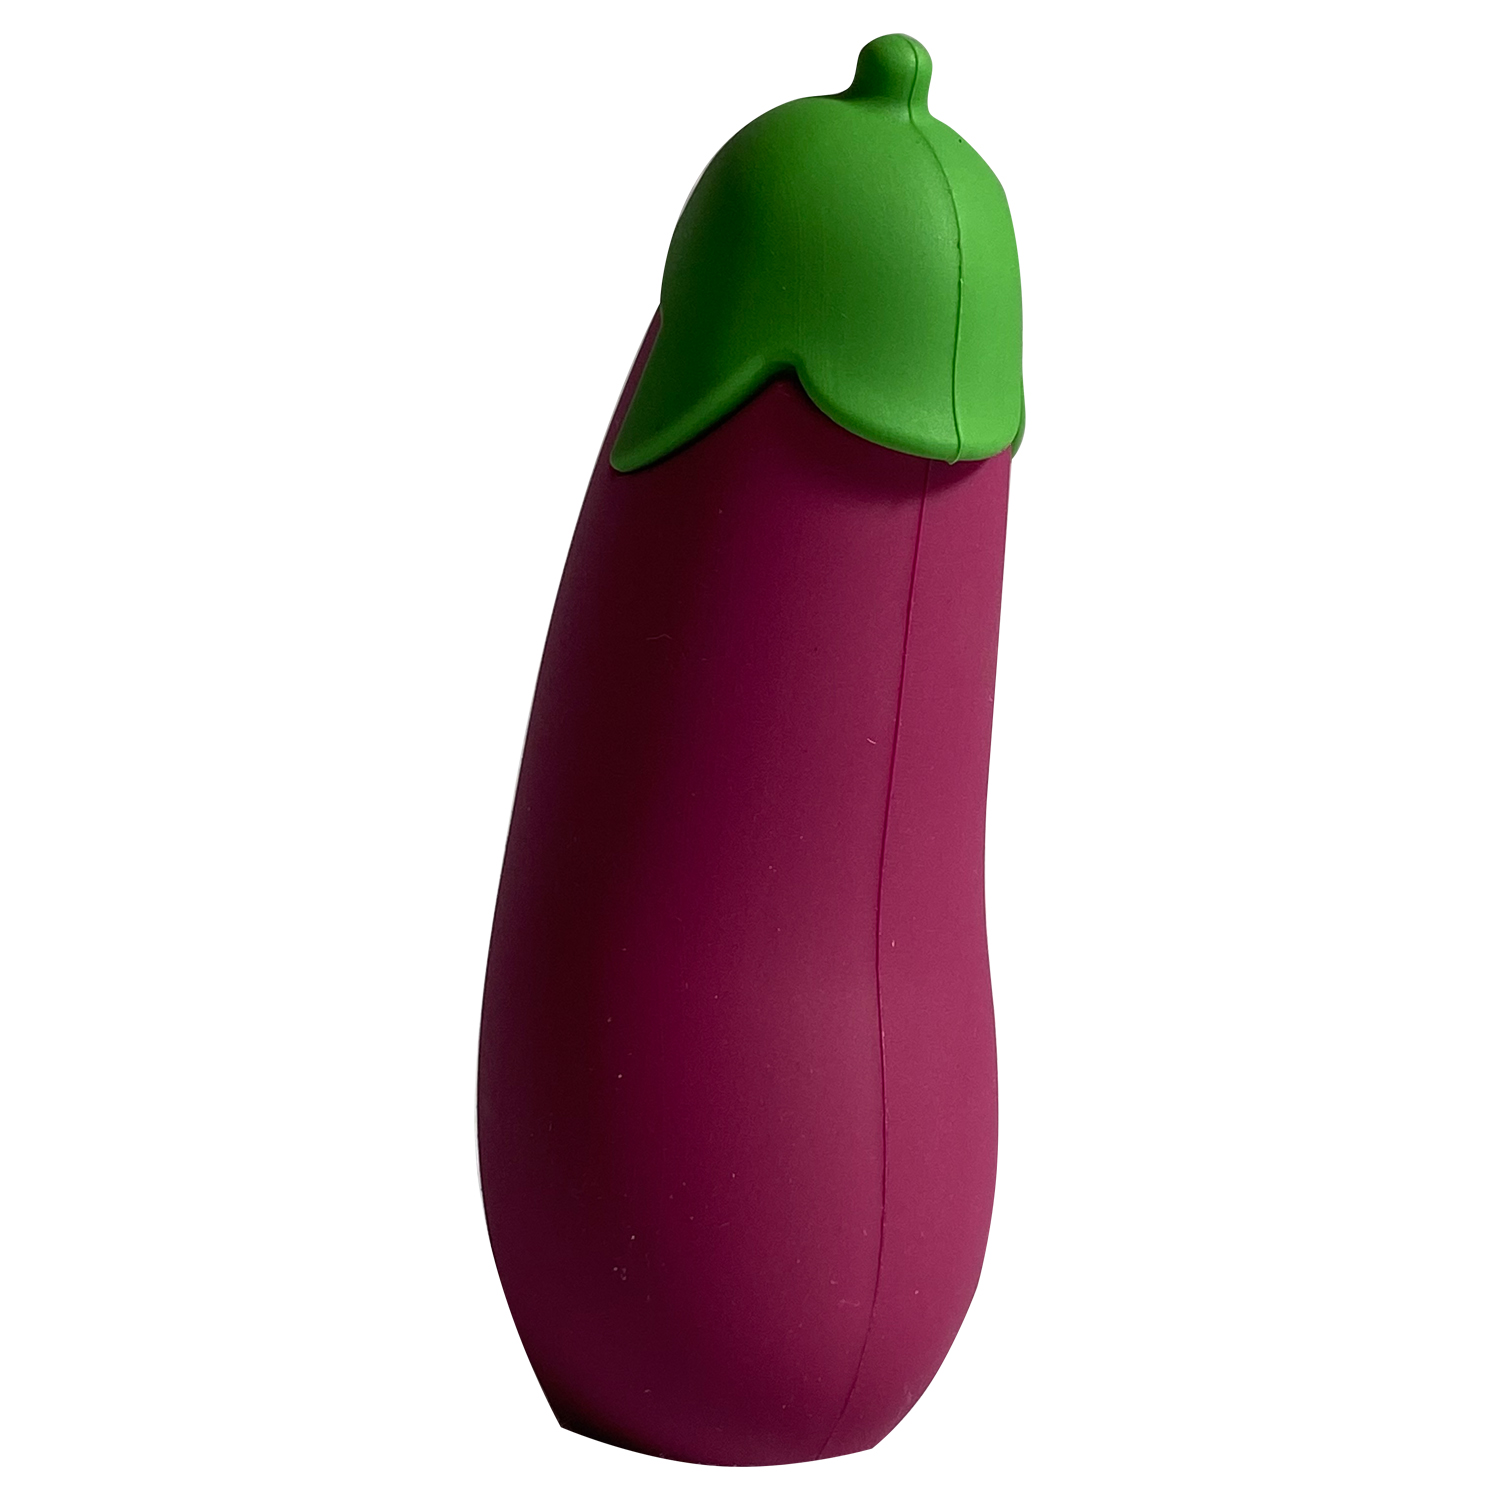 شارژر همراه طرح Eggplant کد A20 ظرفیت 8800 میلی آمپر ساعت